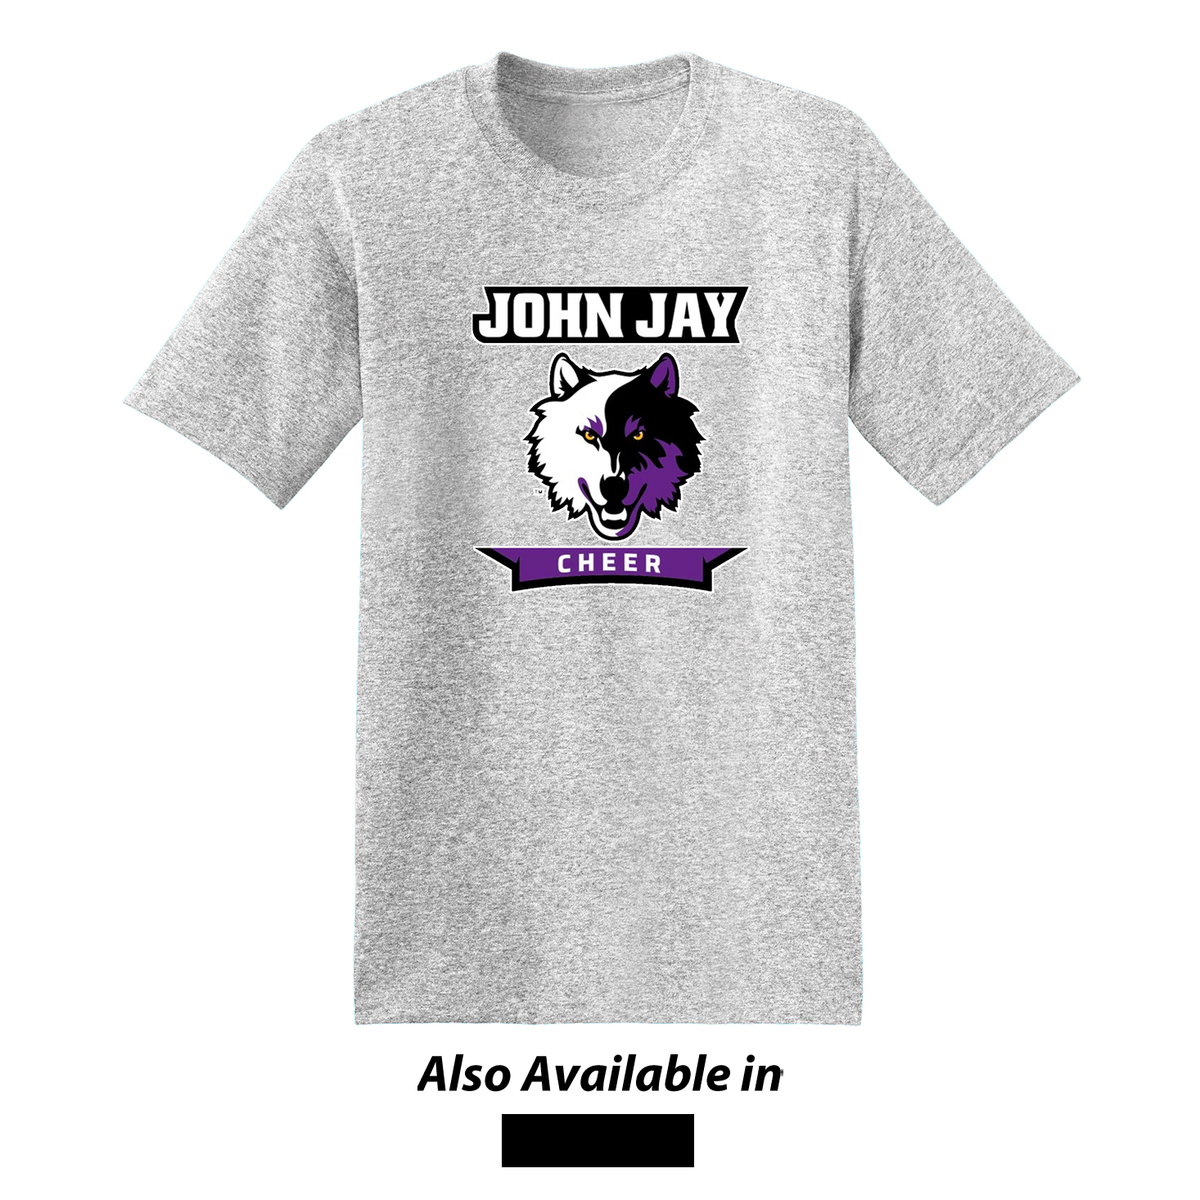 John Jay Youth Cheer T-Shirt